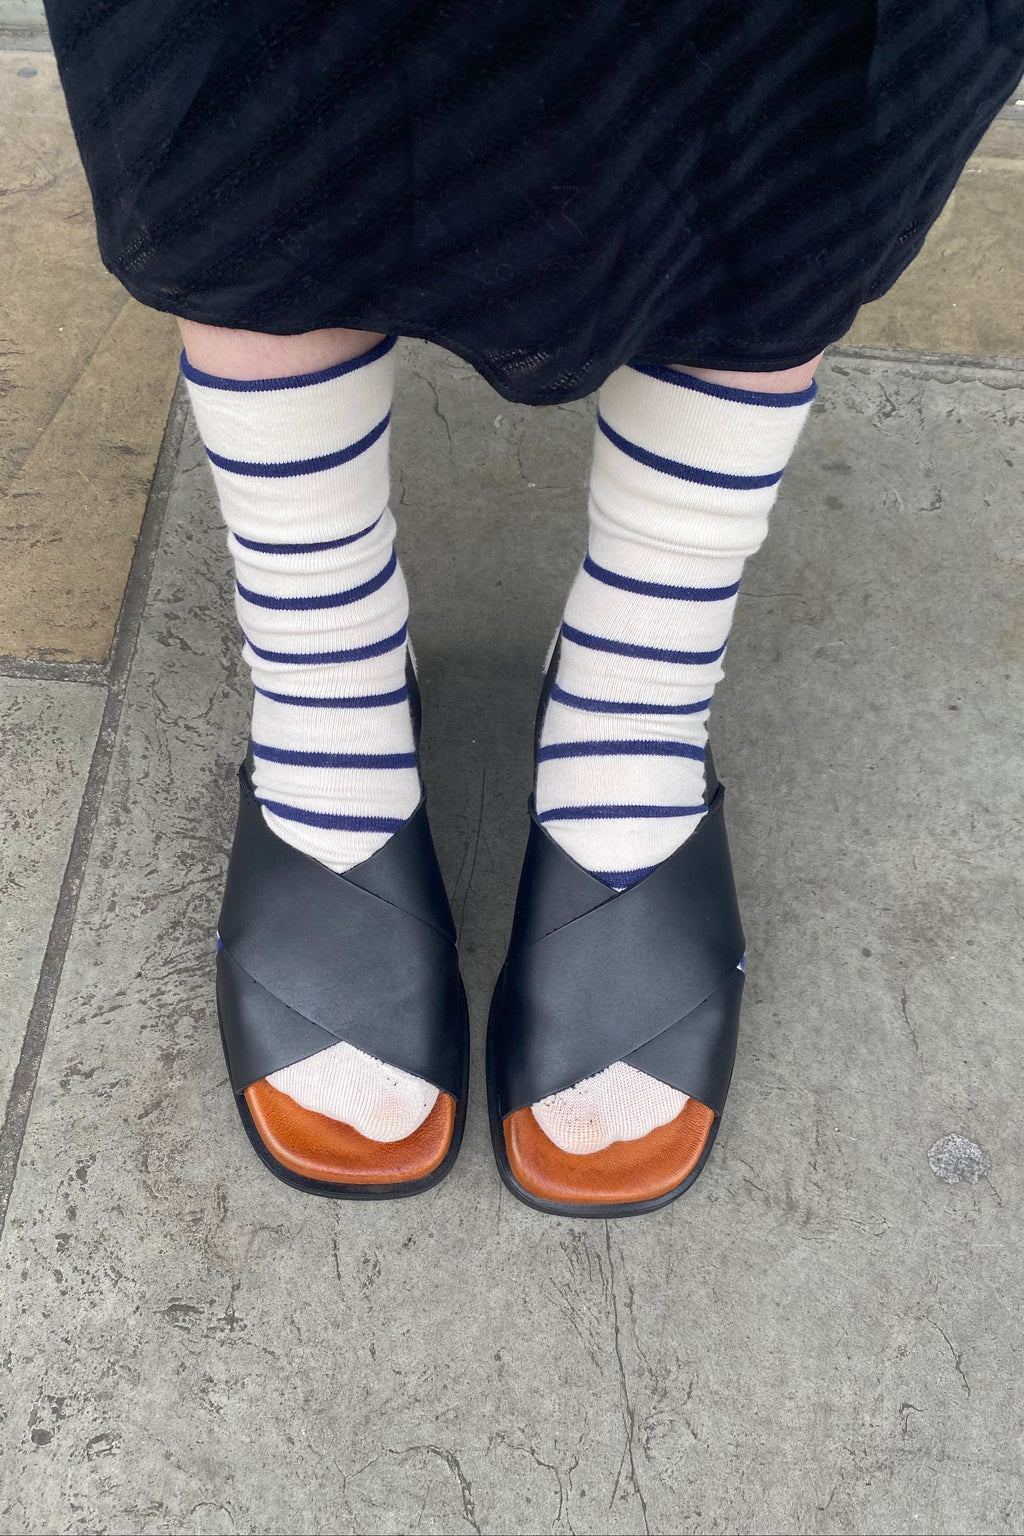 Pavement Carly Black & Tan Sandals - The Mercantile London